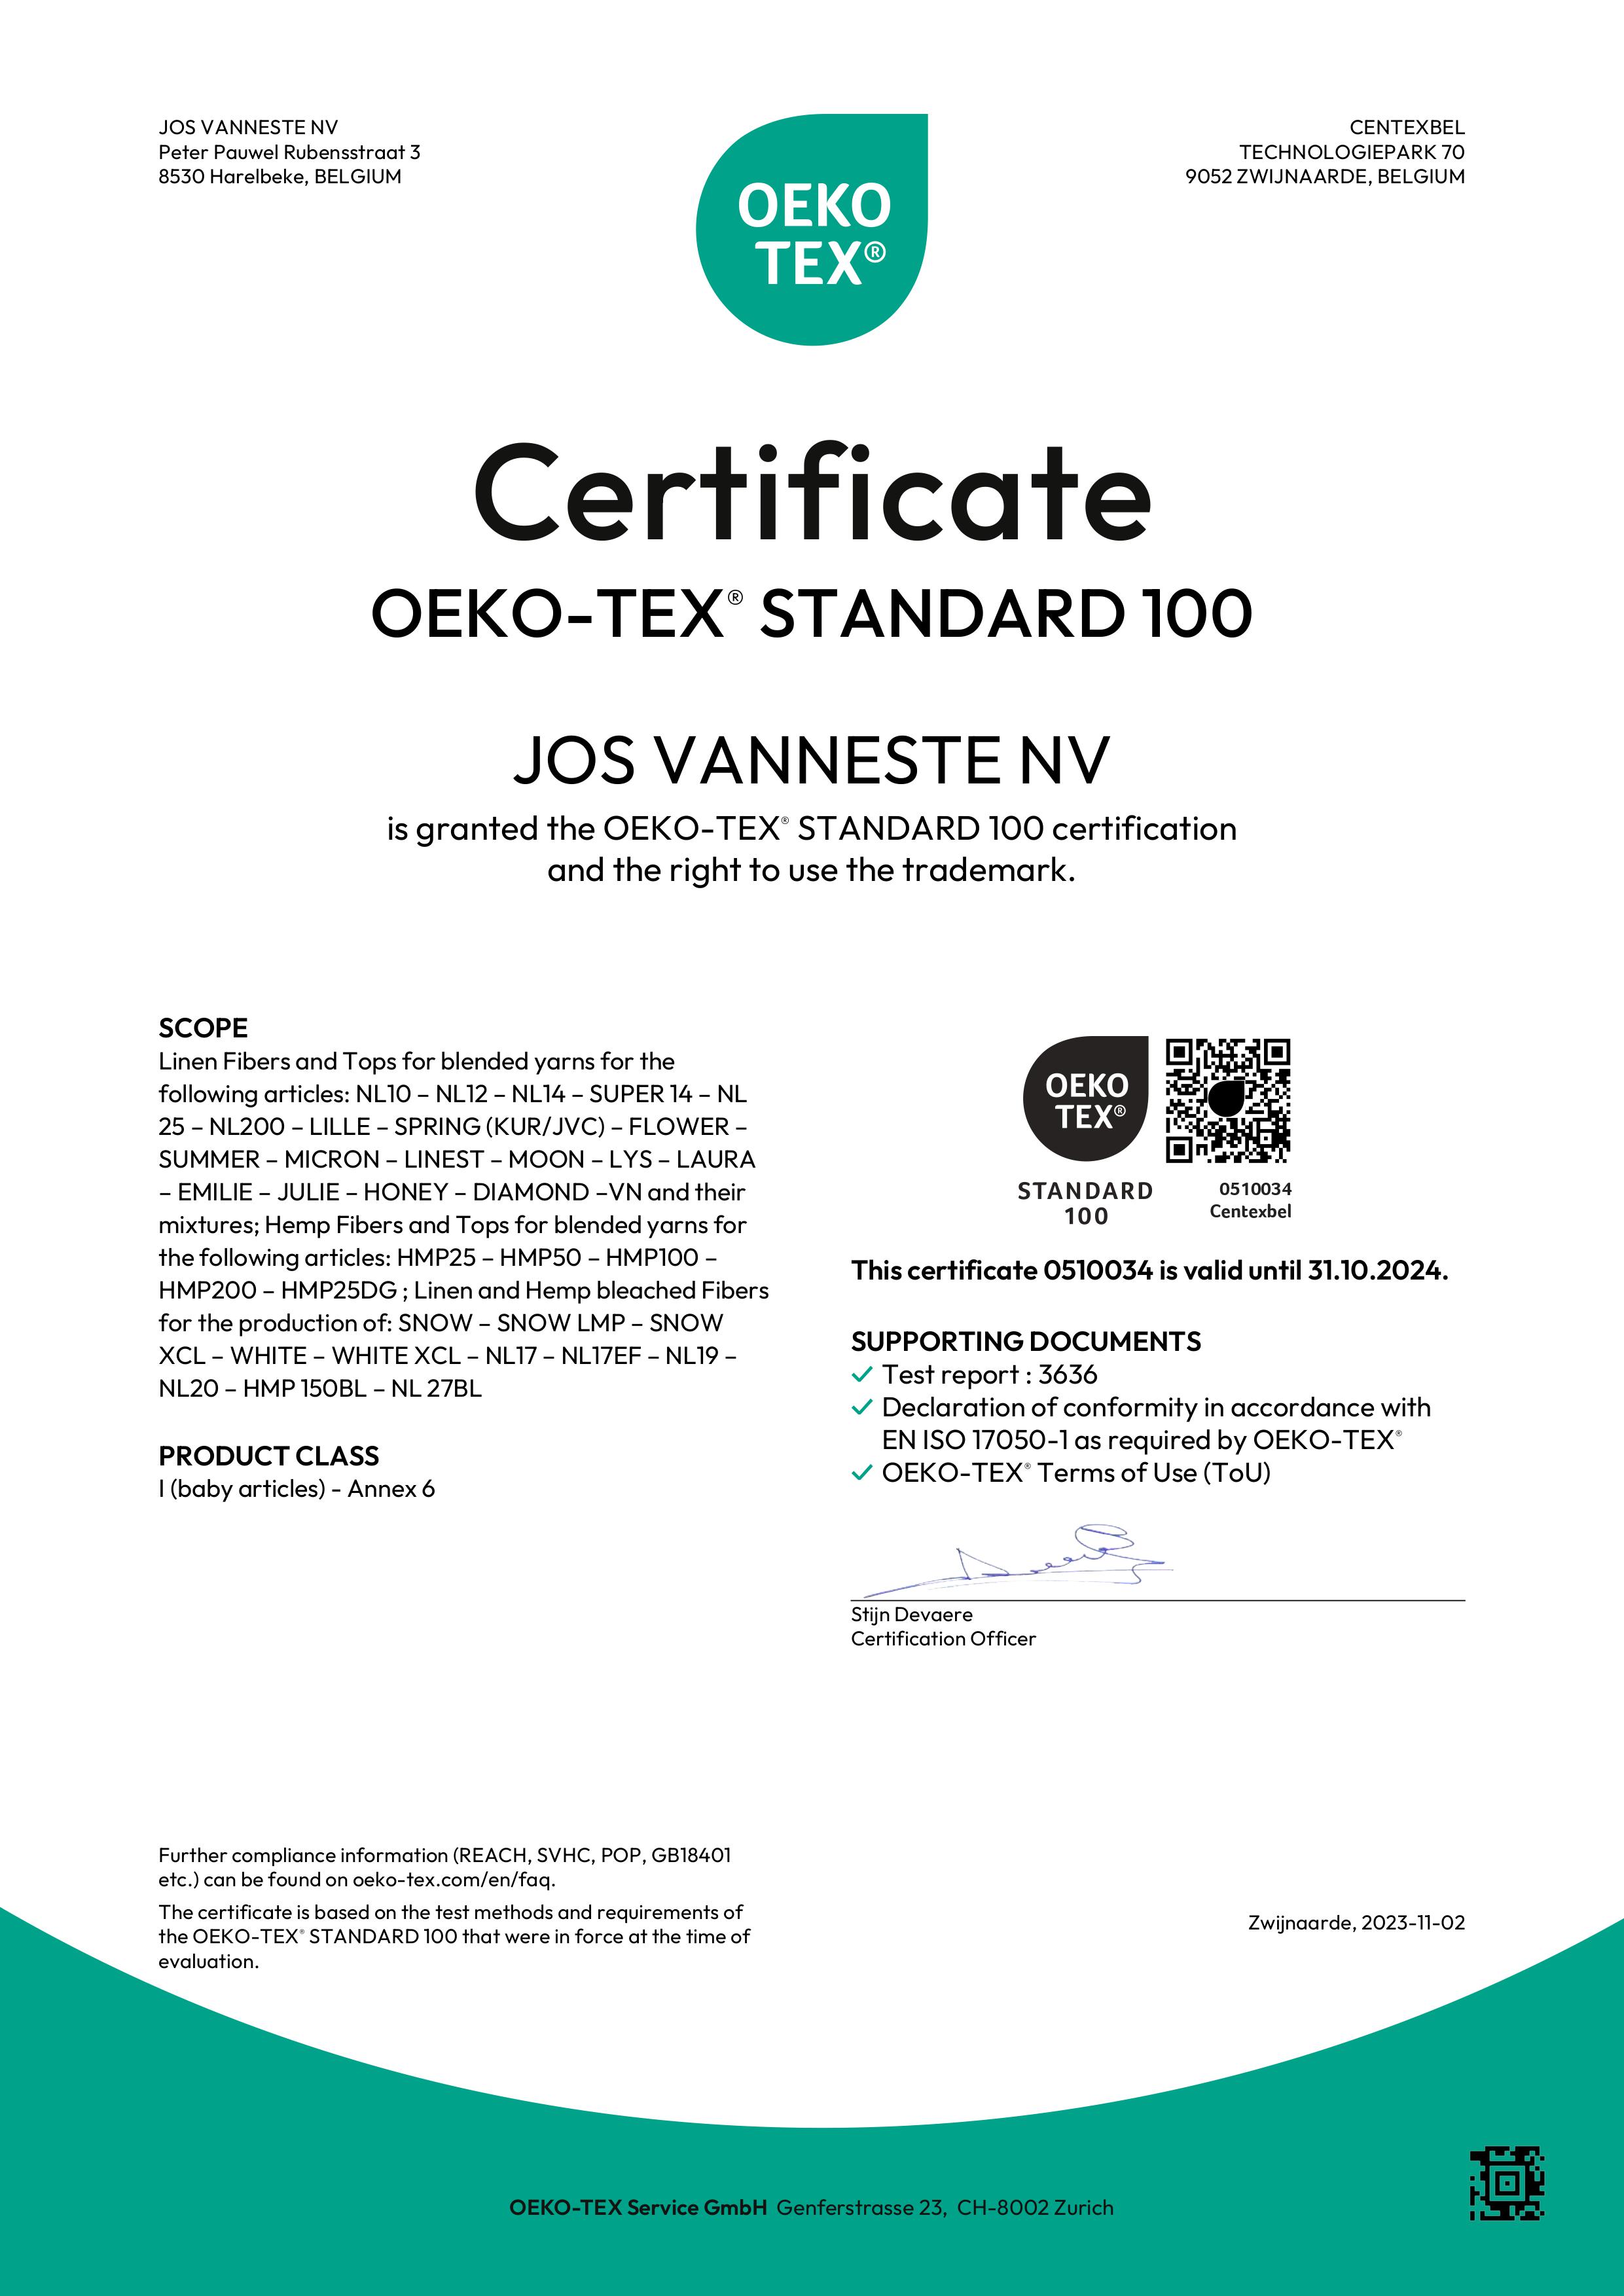 https://www.jos-vanneste.com/media/jub/images/default/Oeko-Tex-Certification---Jos-Vanneste-2024.jpg